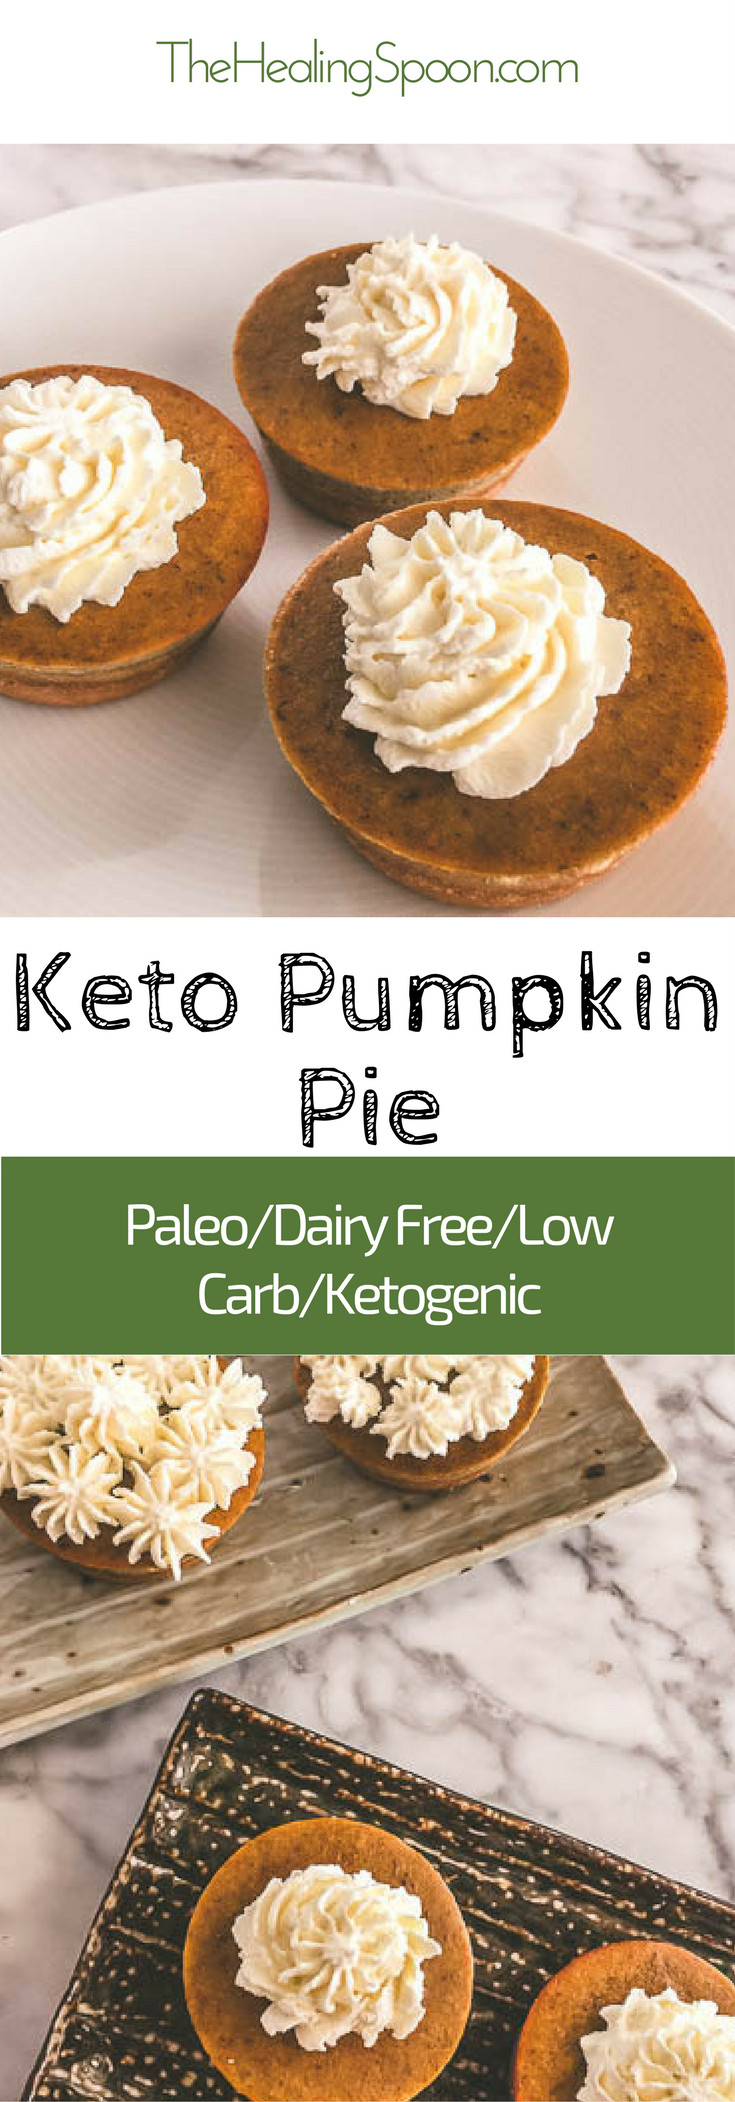 Keto Pumpkin Dessert
 keto lowcarb dairy free paleo mini pumpkin pie